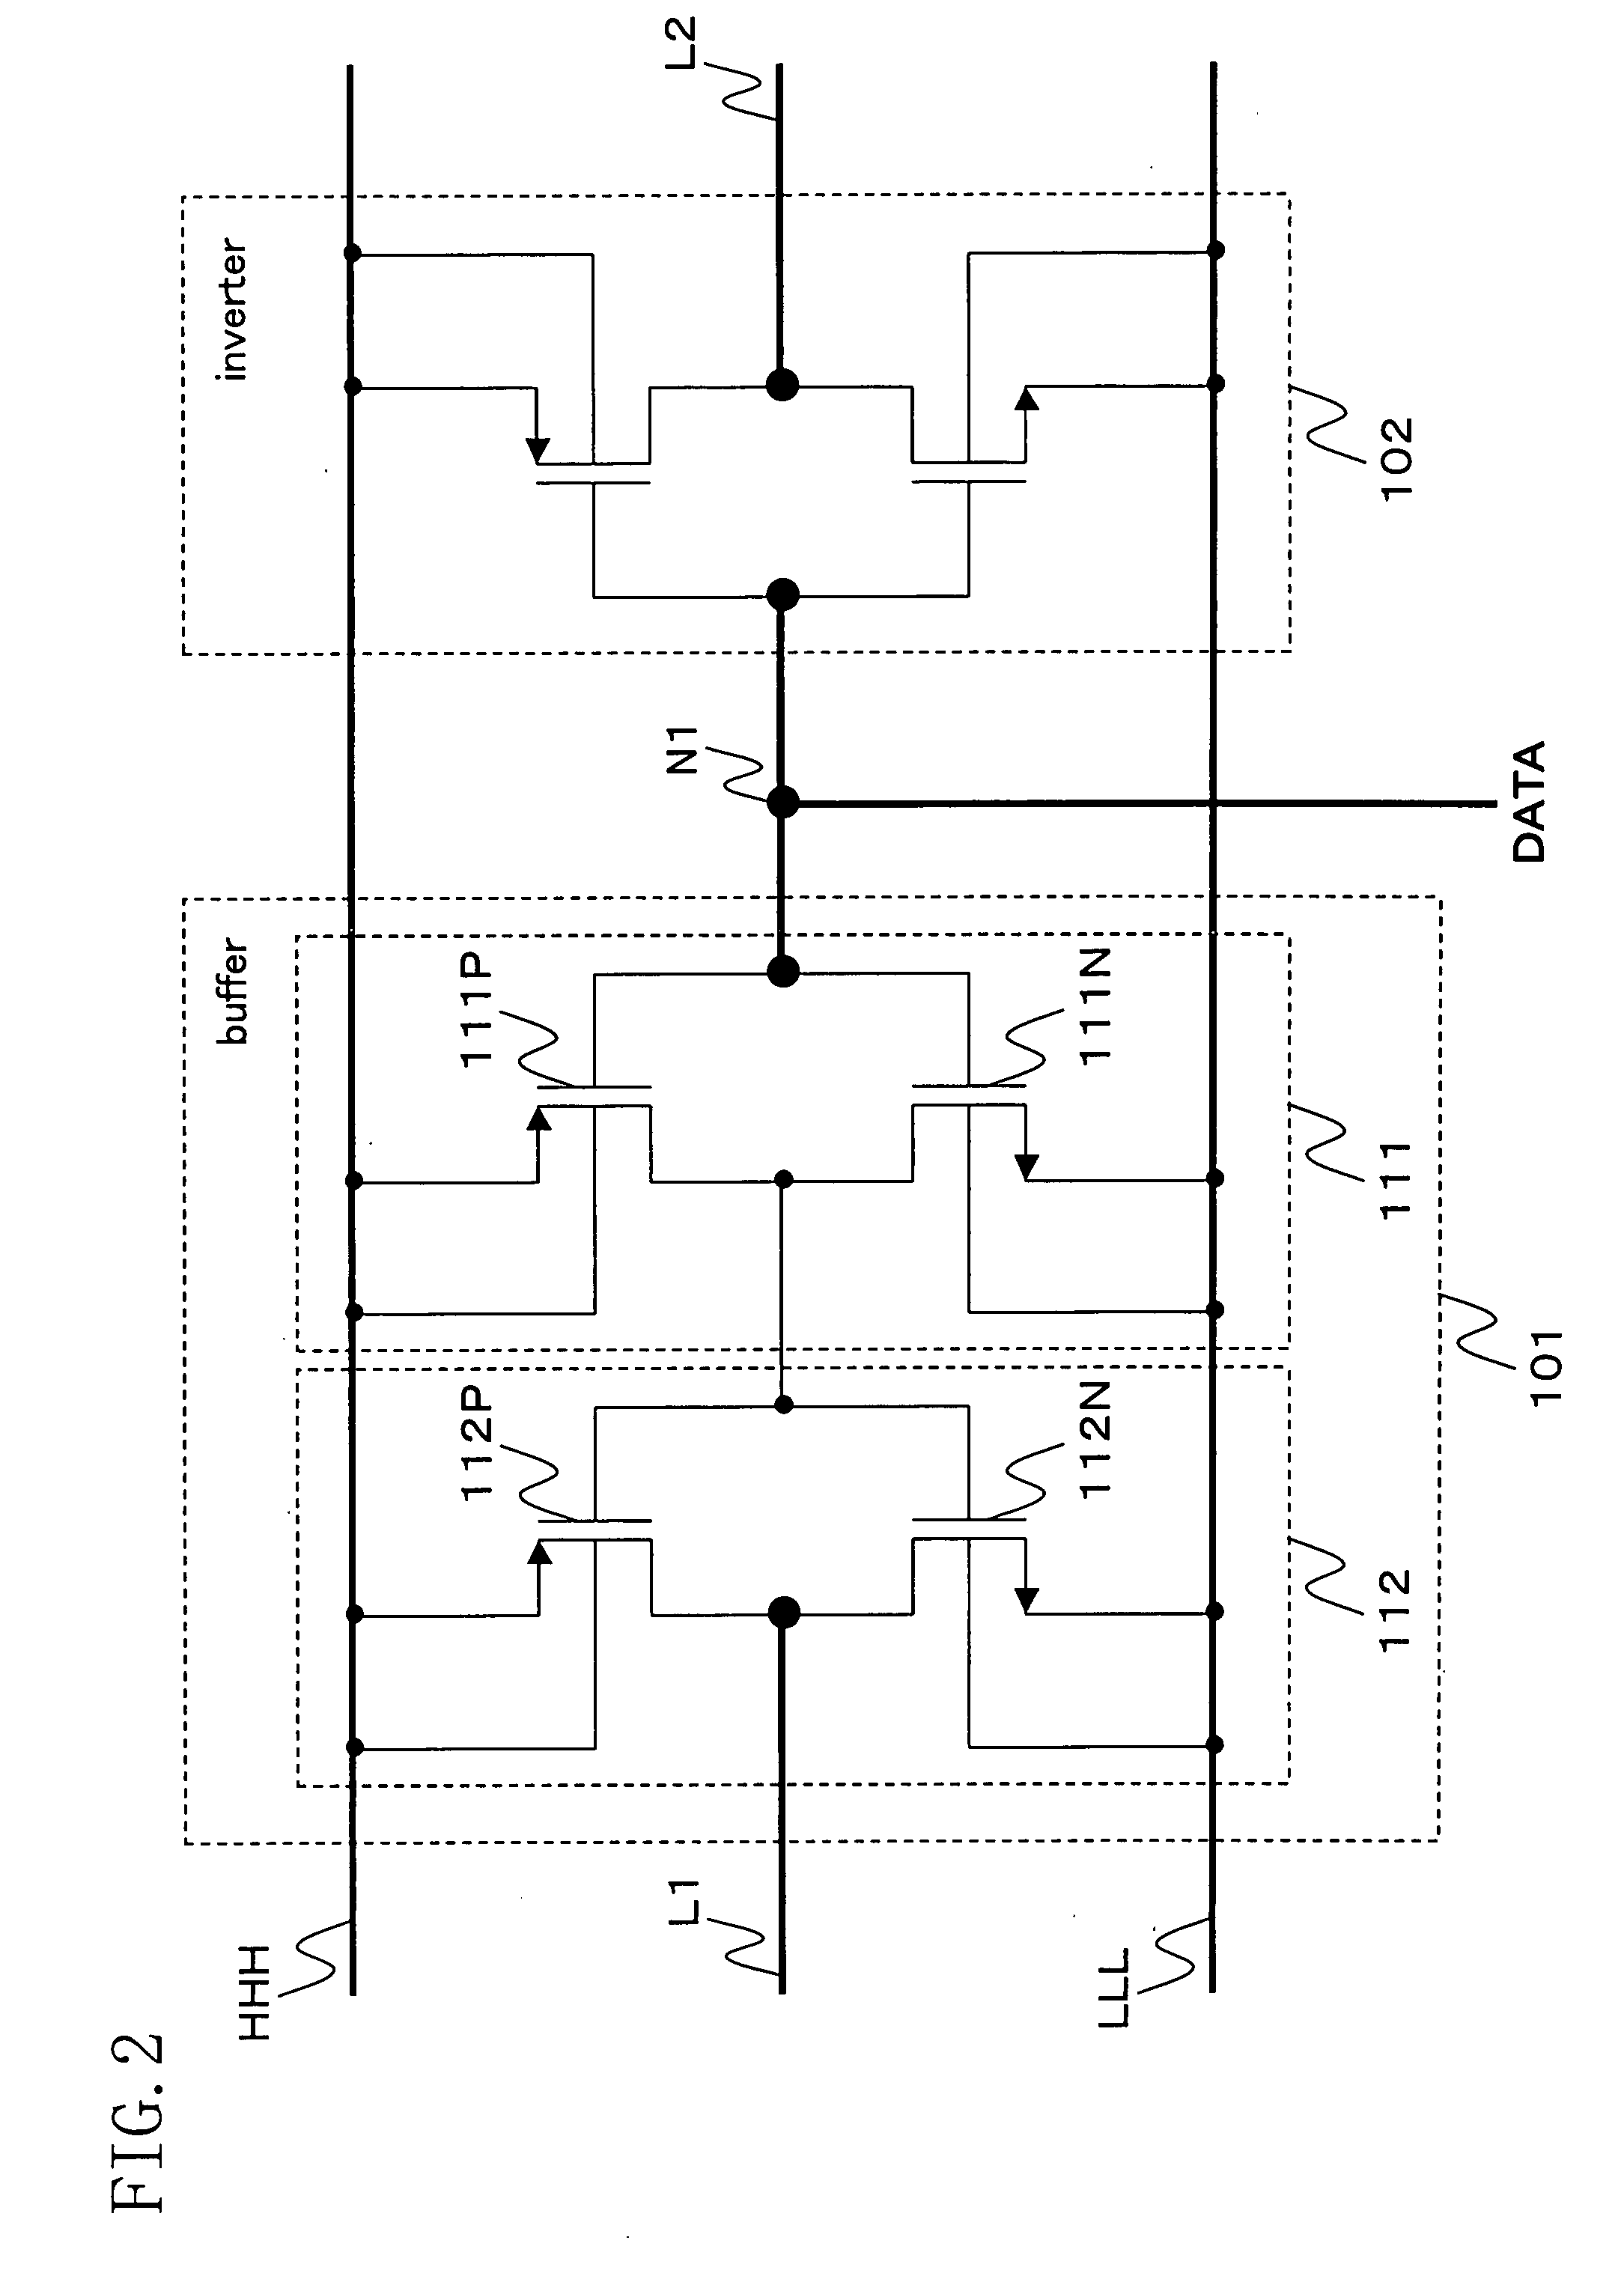 Signal transfer circuit, display data processing apparatus, and display apparatus